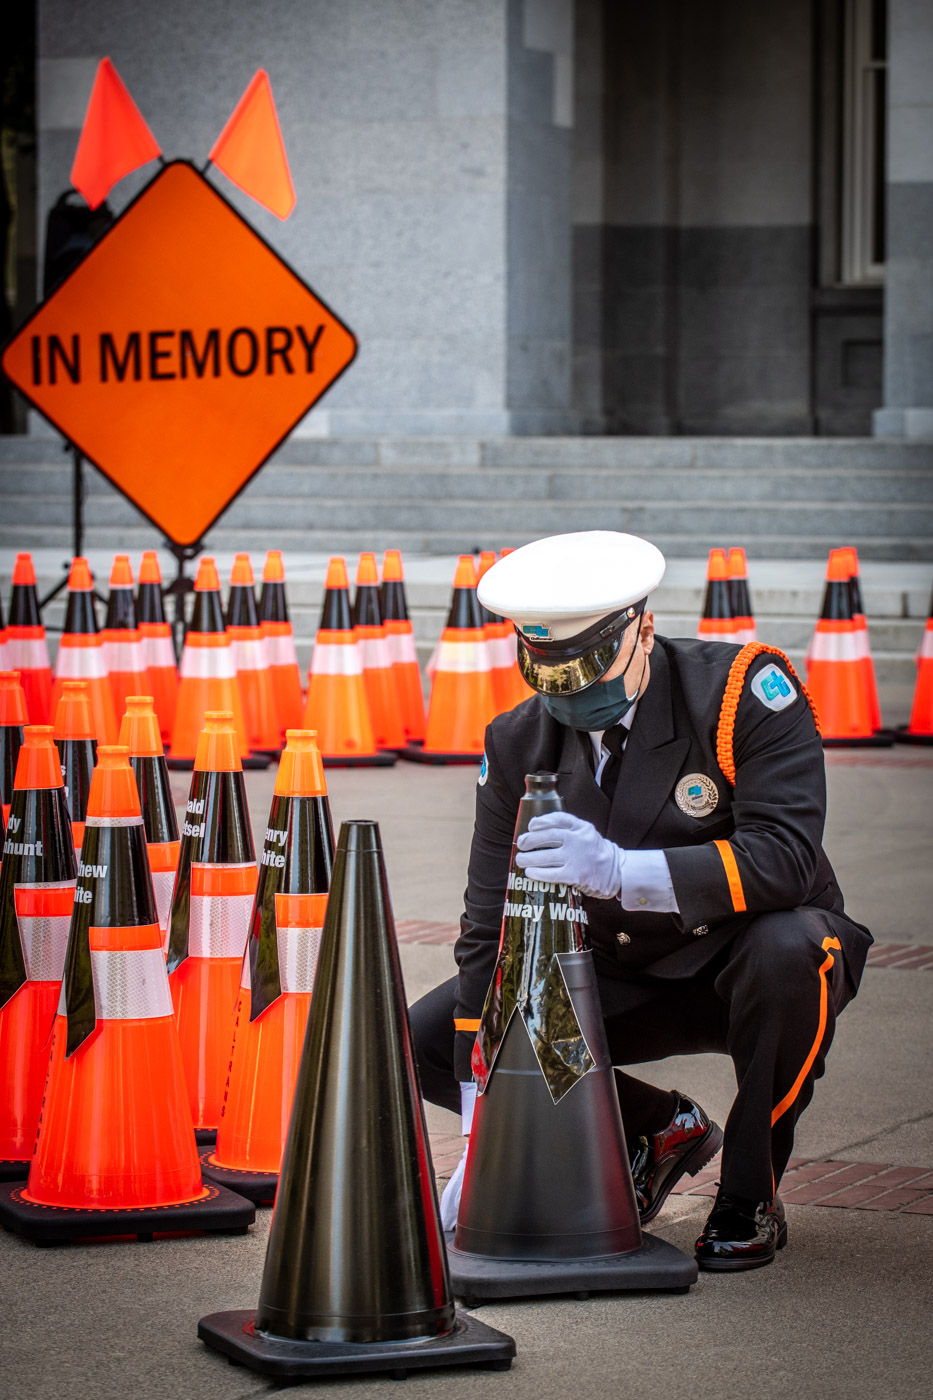 Caltrans Honors 189 Fallen Highway Workers at 31st Annual Memorial